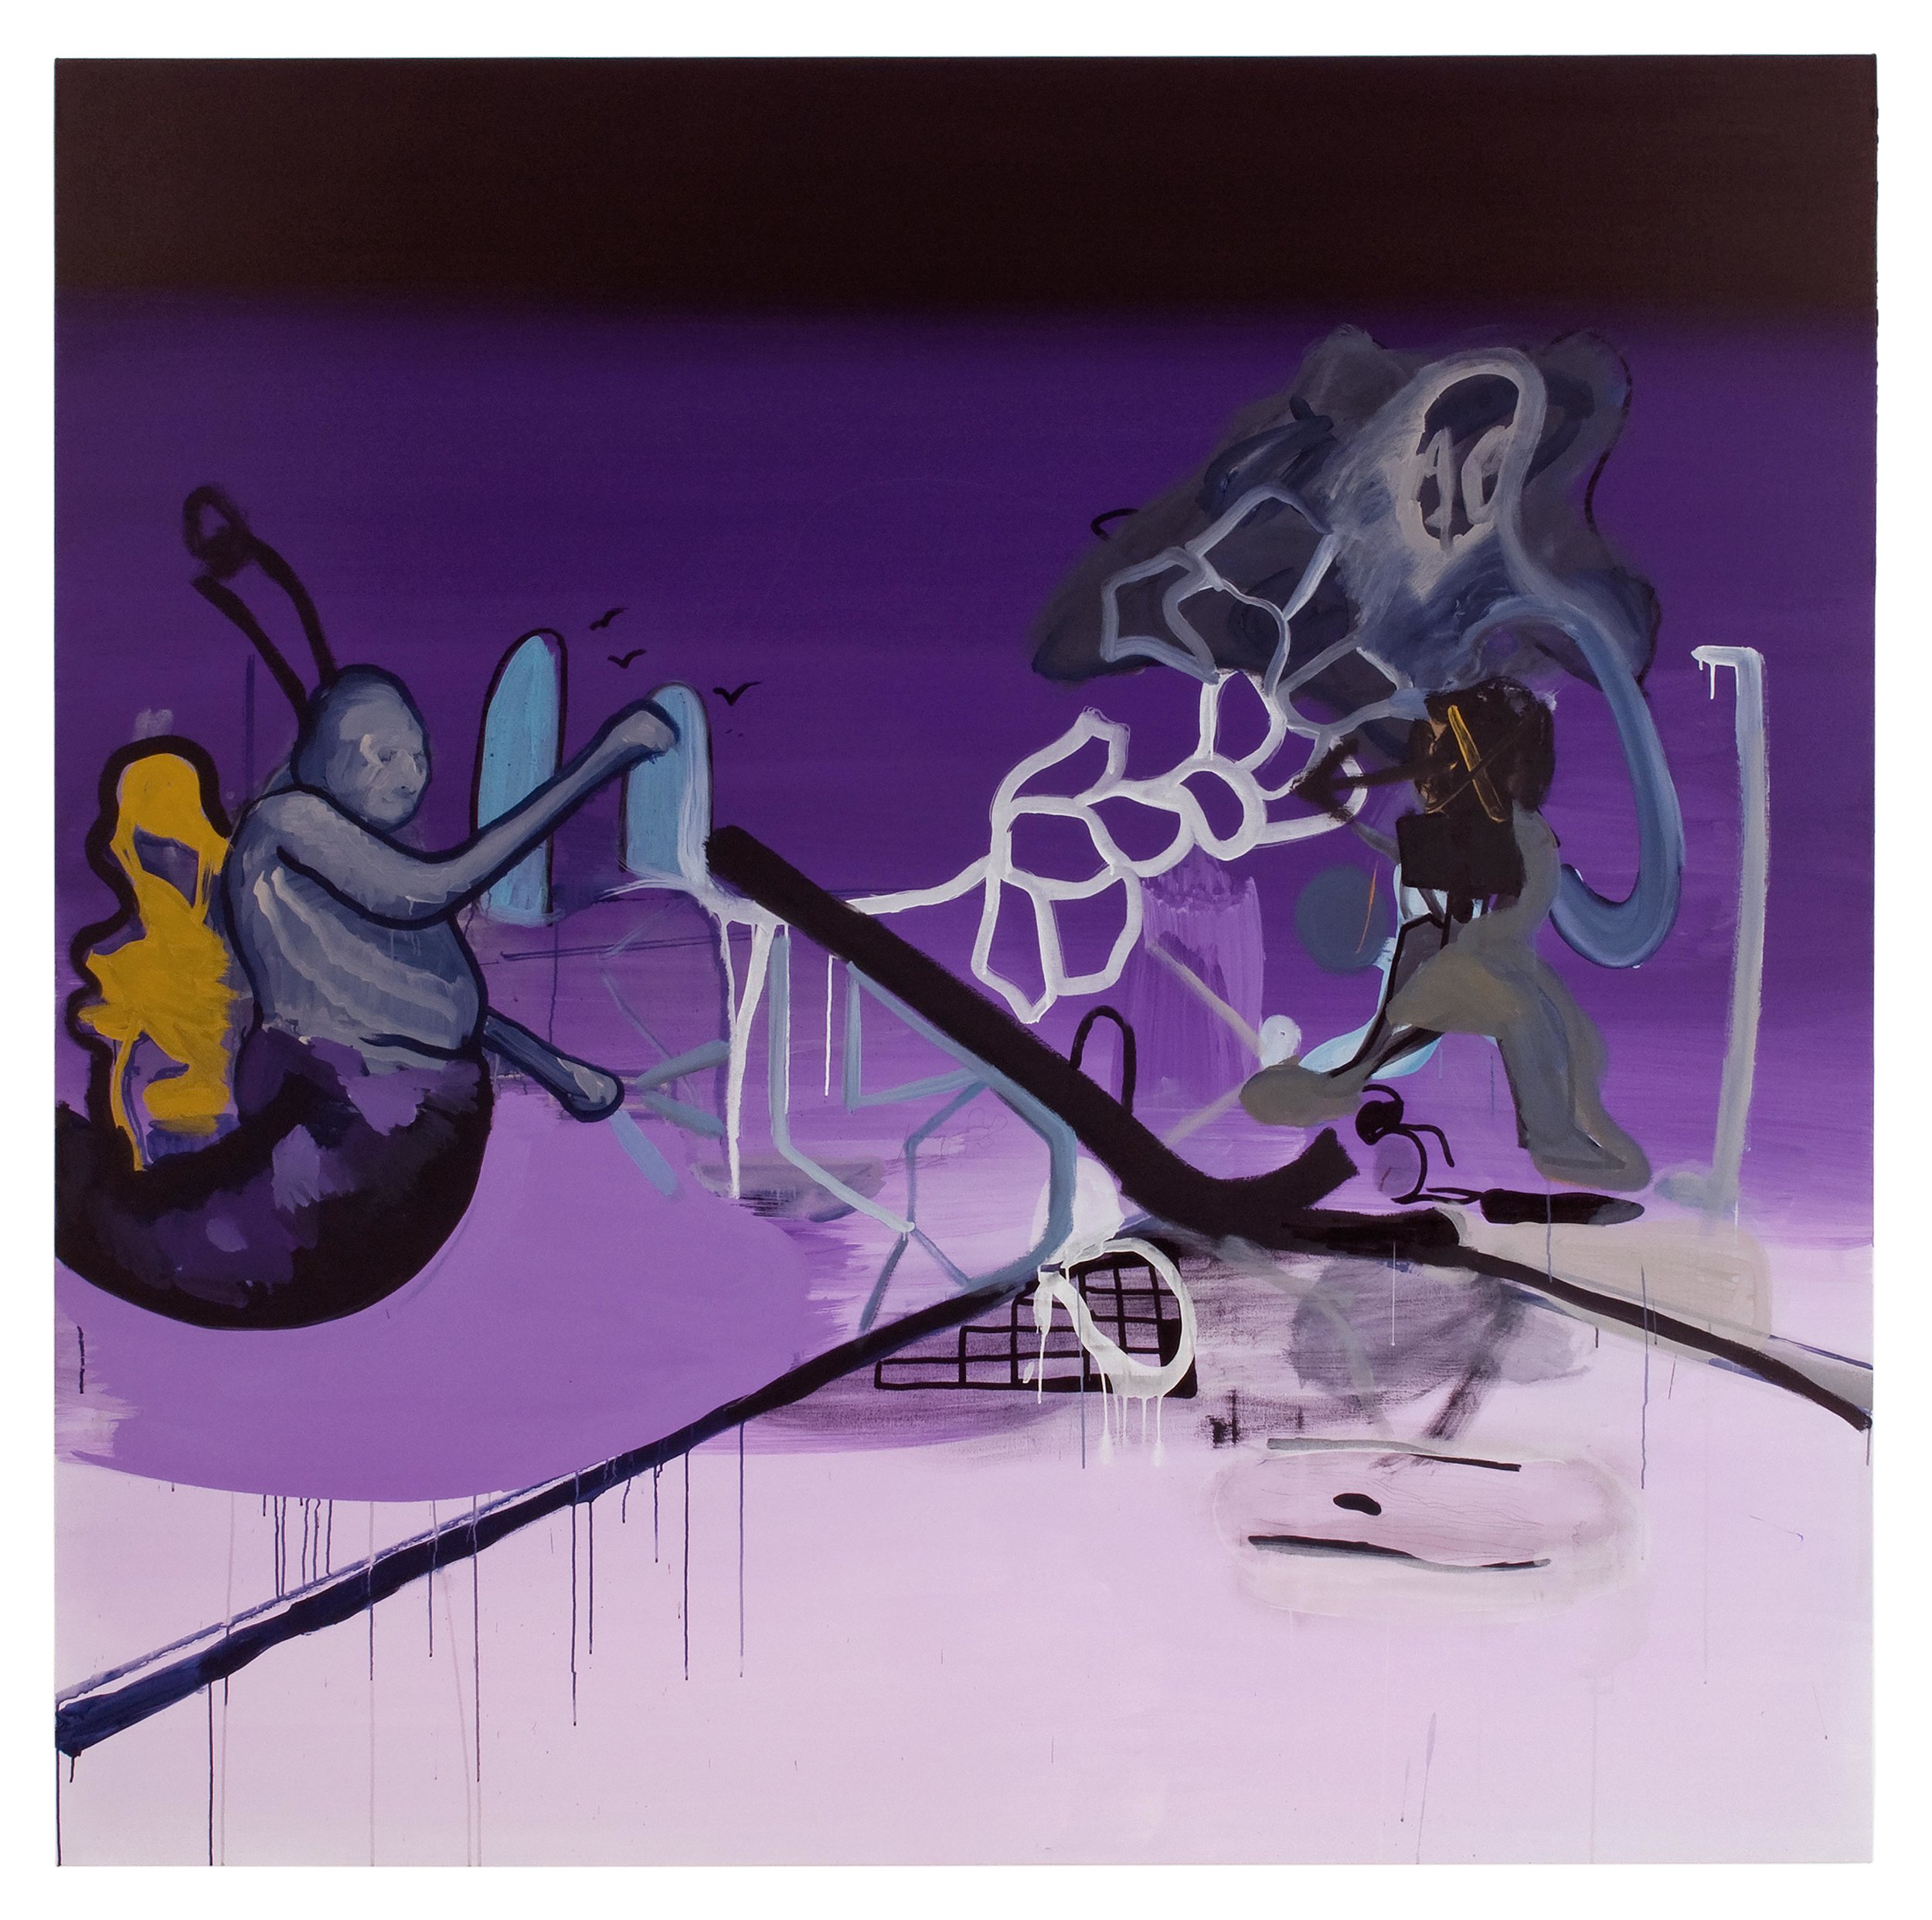  Drew Beattie  The Room &nbsp; 2010 acrylic on canvas 96 x 96 inches 